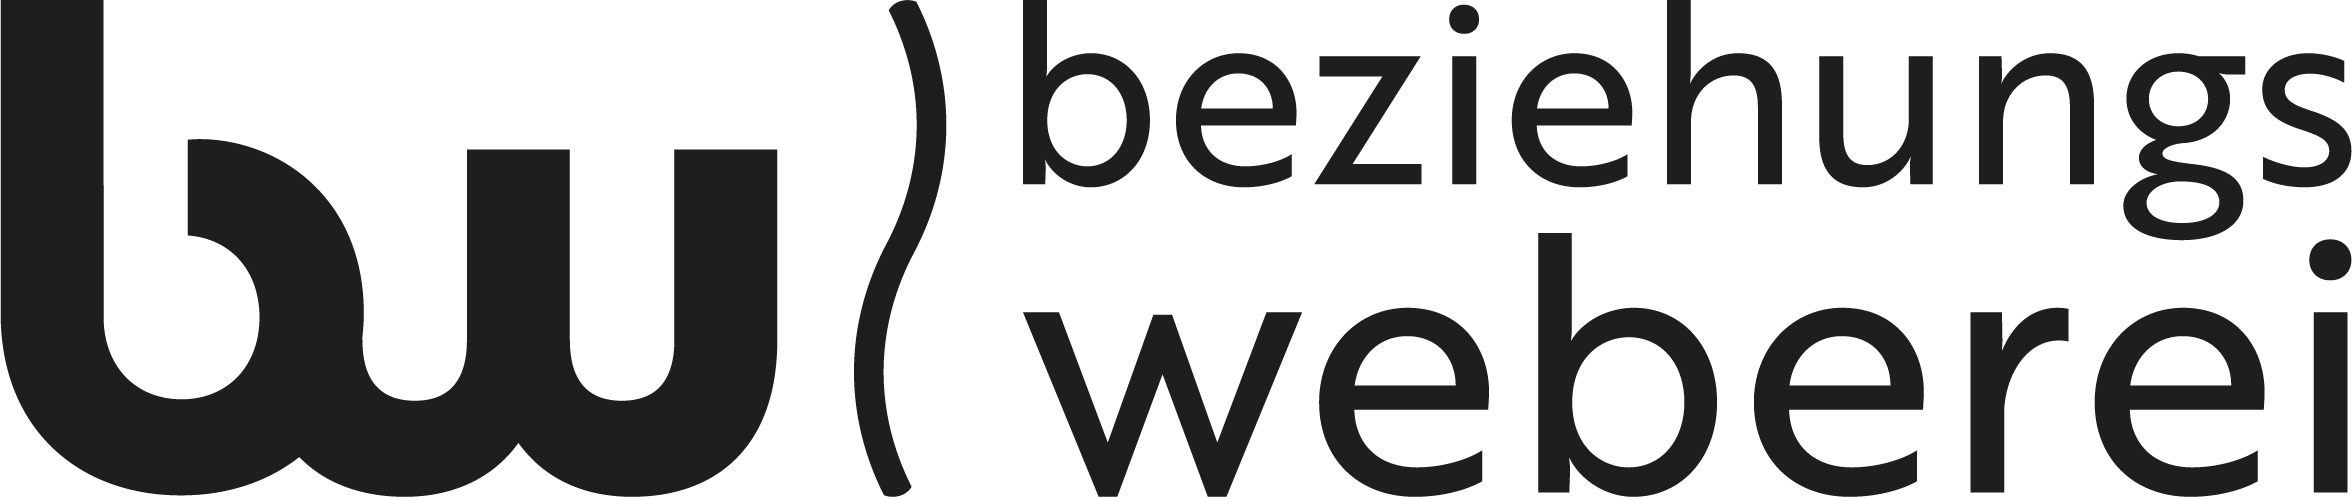 Logo Beziehungsweberei